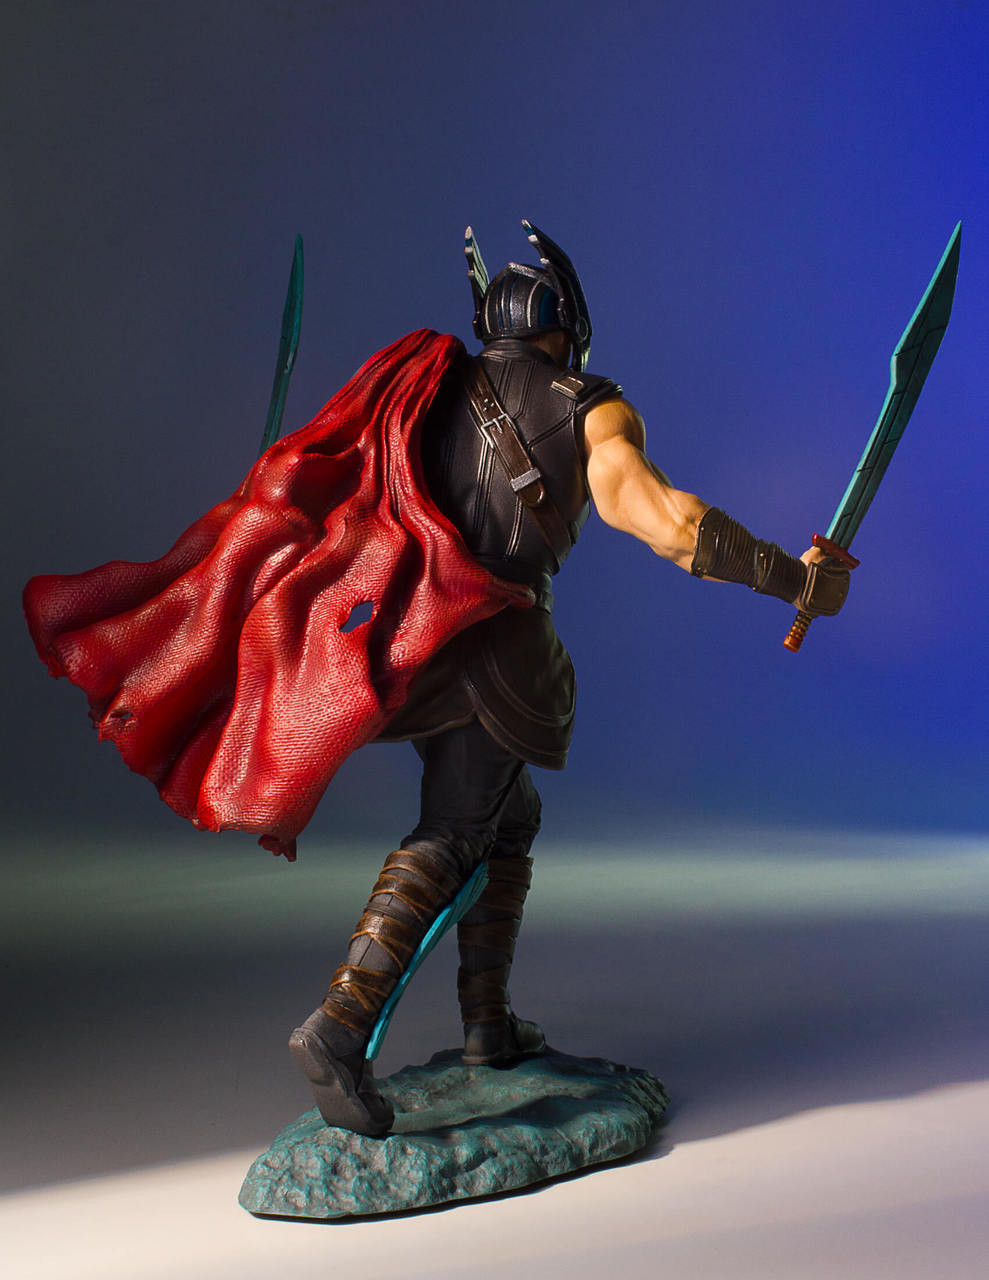 DST Marvel Gallery Thor Ragnarok Statue Up for Order! - Marvel Toy News